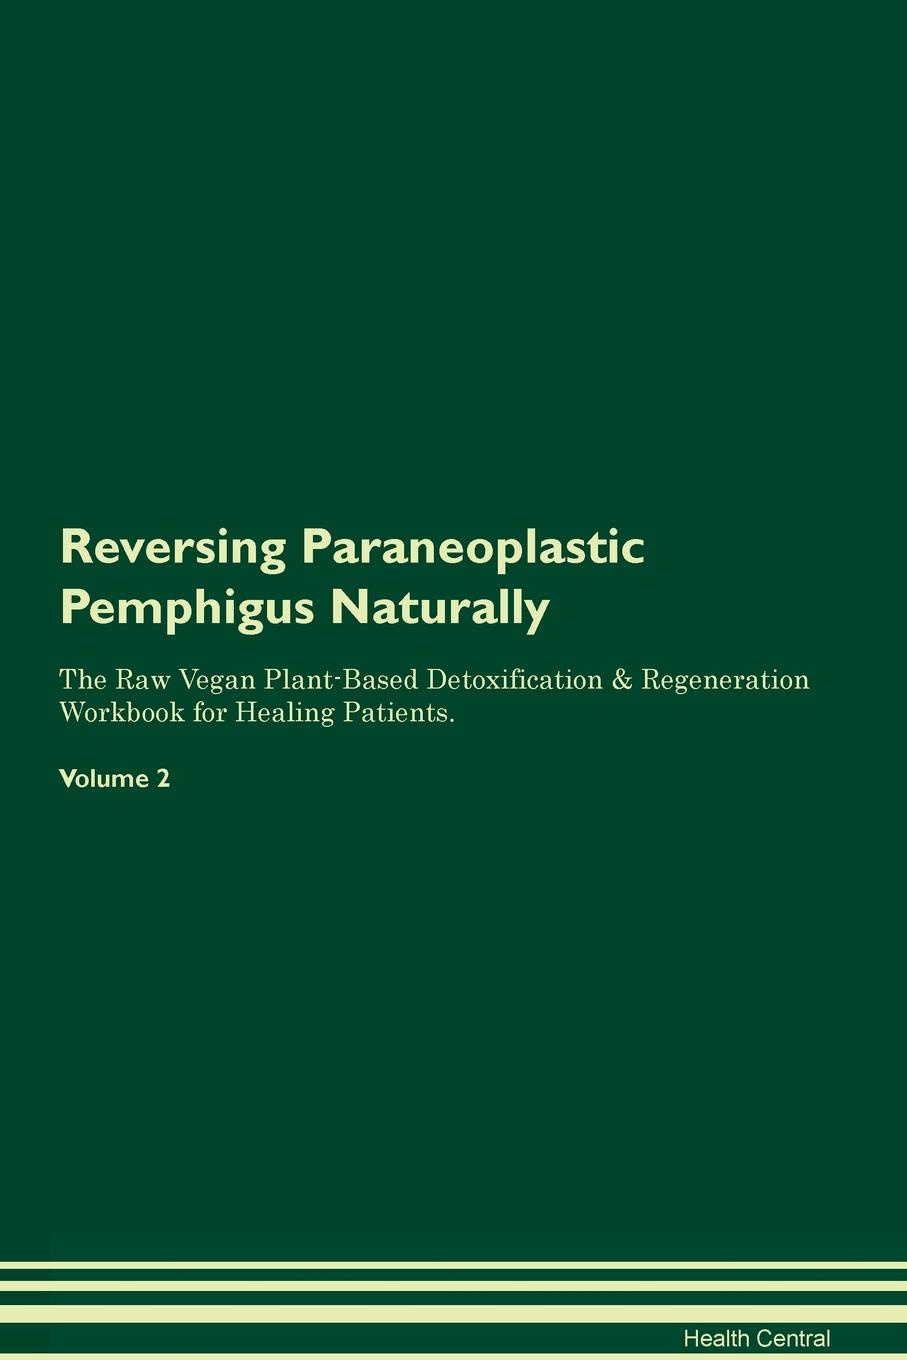 Reversing Paraneoplastic Pemphigus Naturally The Raw Vegan Plant-Based Detoxification & Regeneration Workbook for Healing Patients. Volume 2